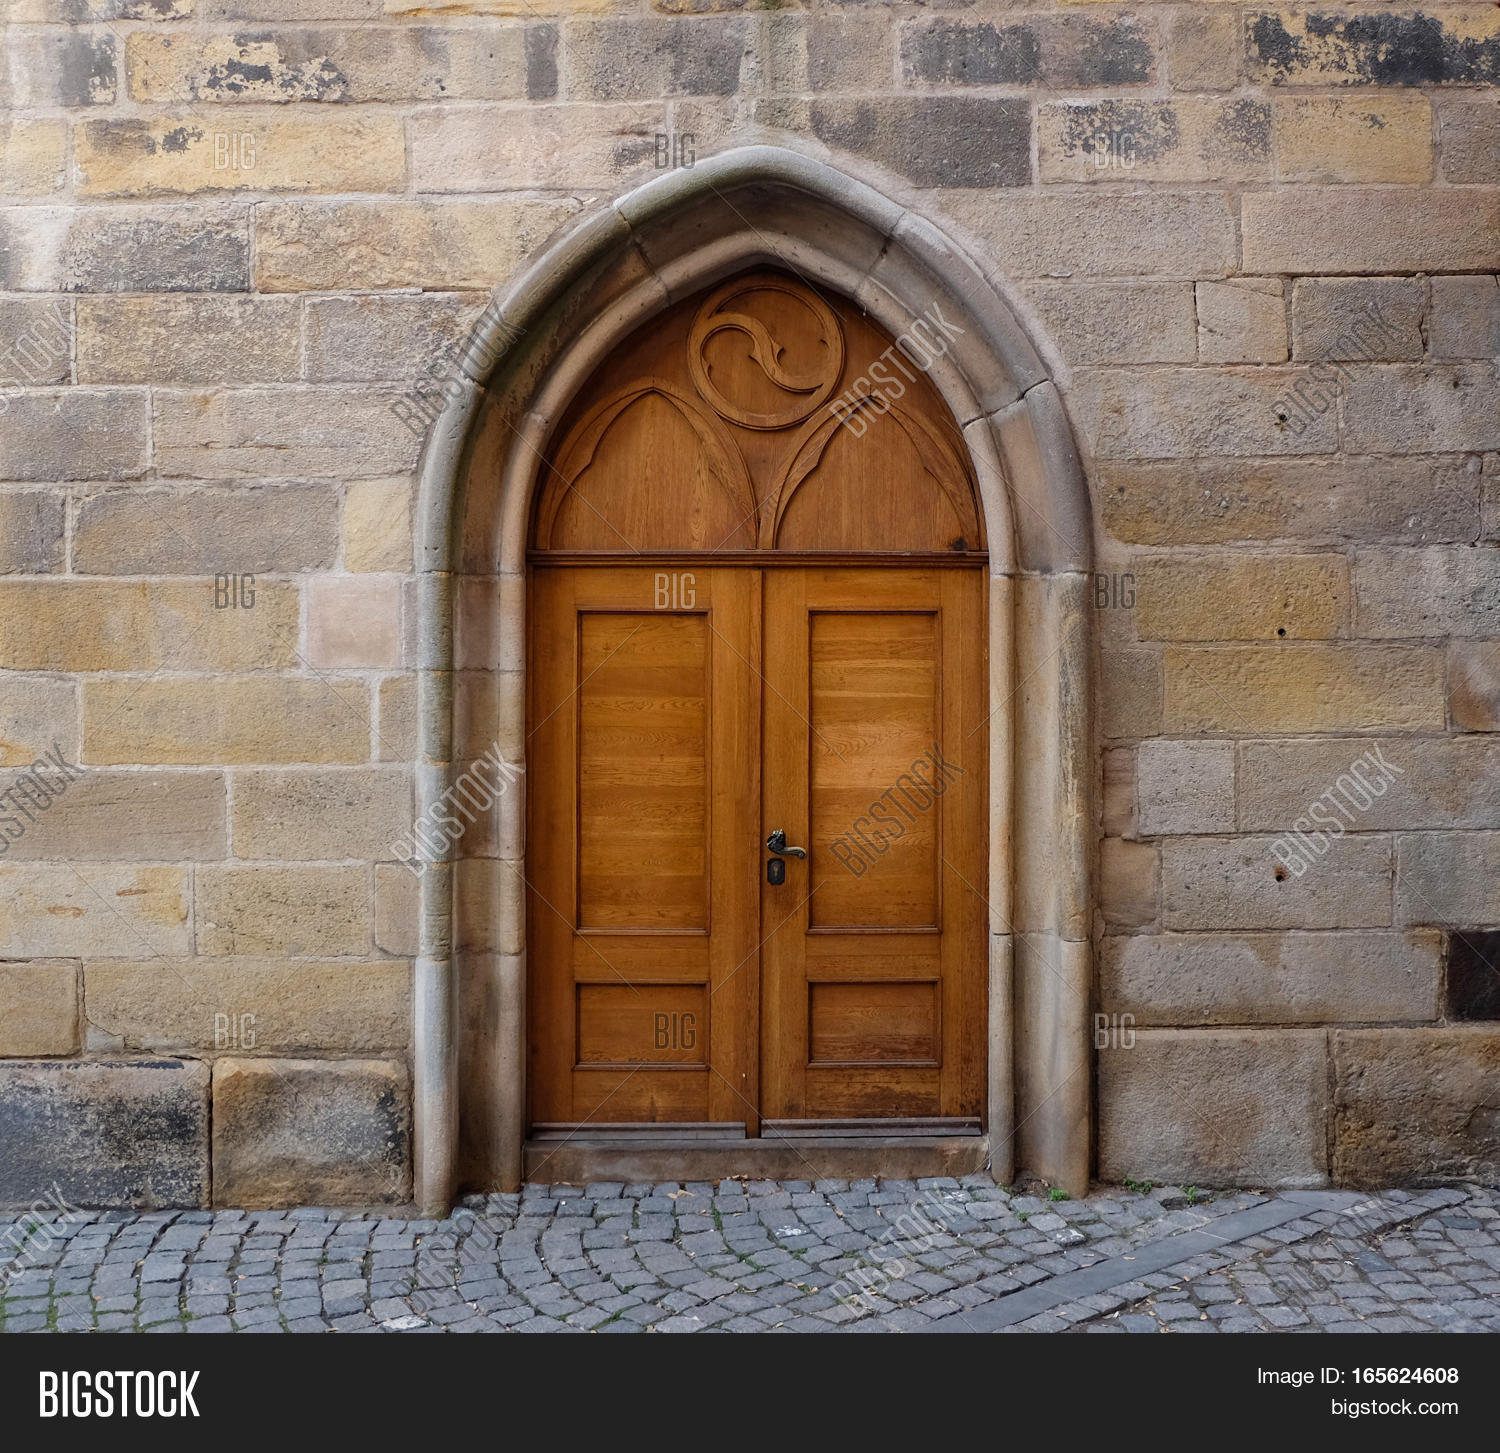 Closed Wooden Double Door Stone Image & Photo | Bigstock